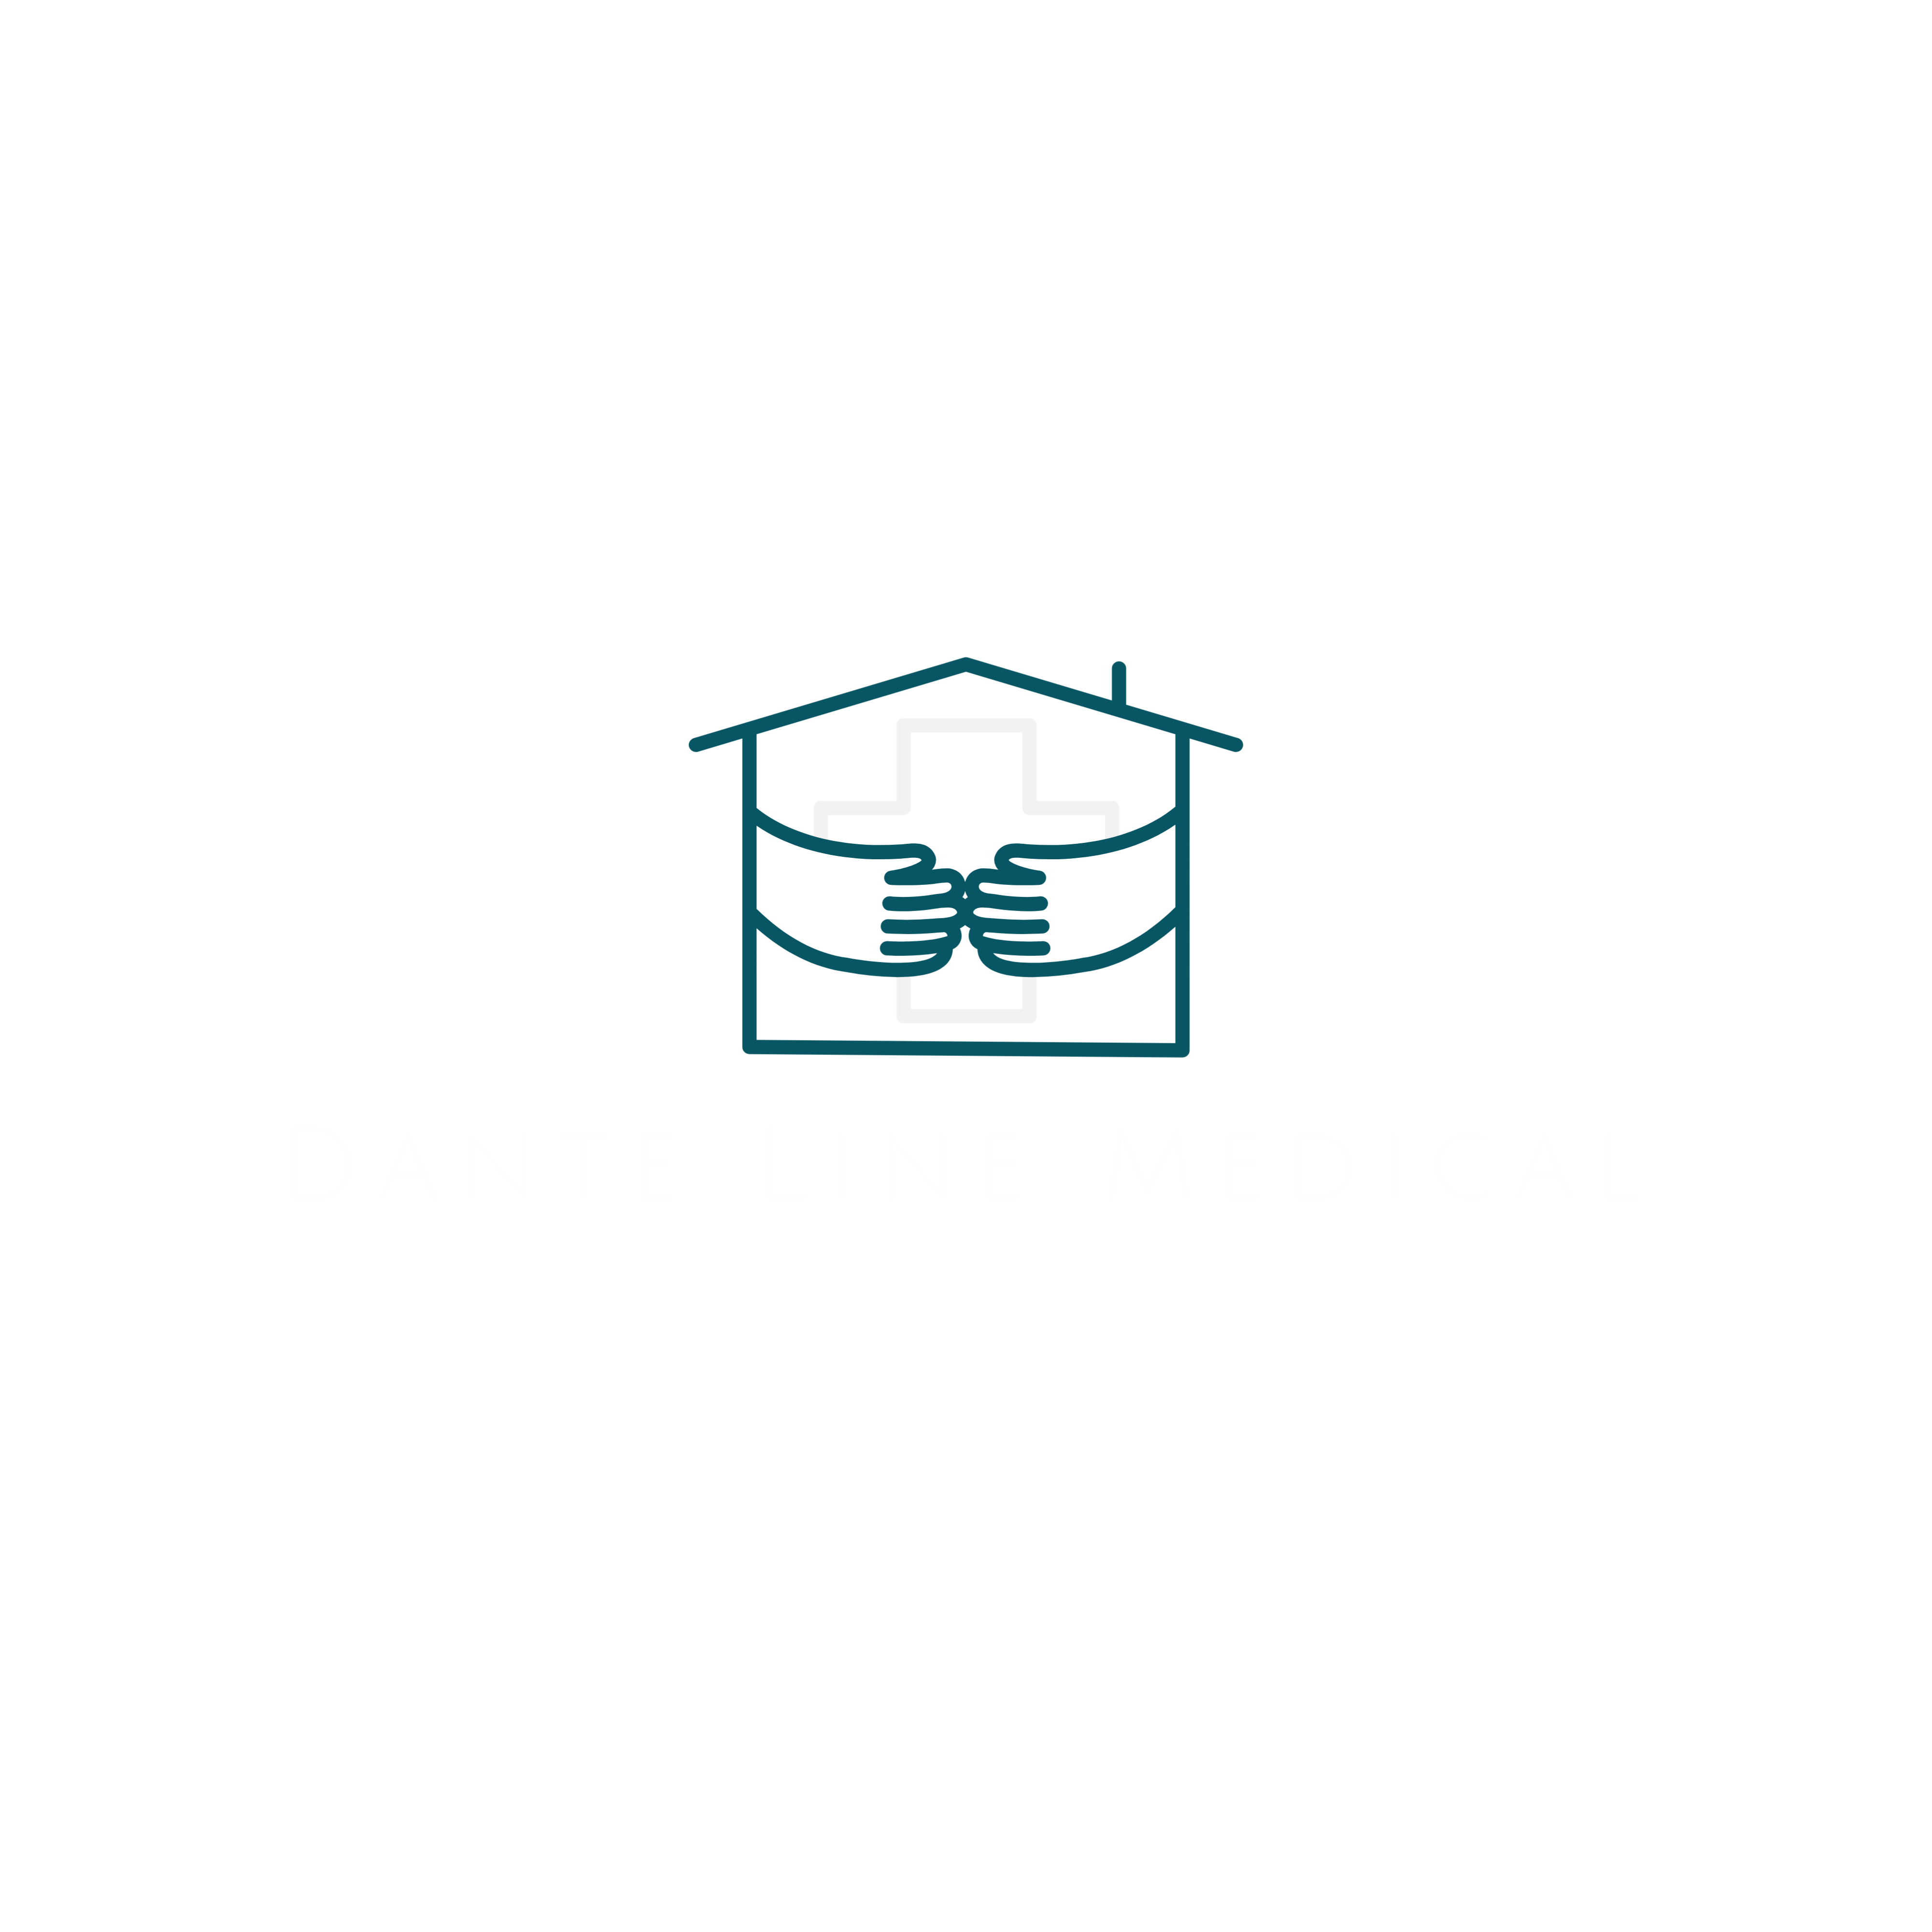 Dante Line Medical 